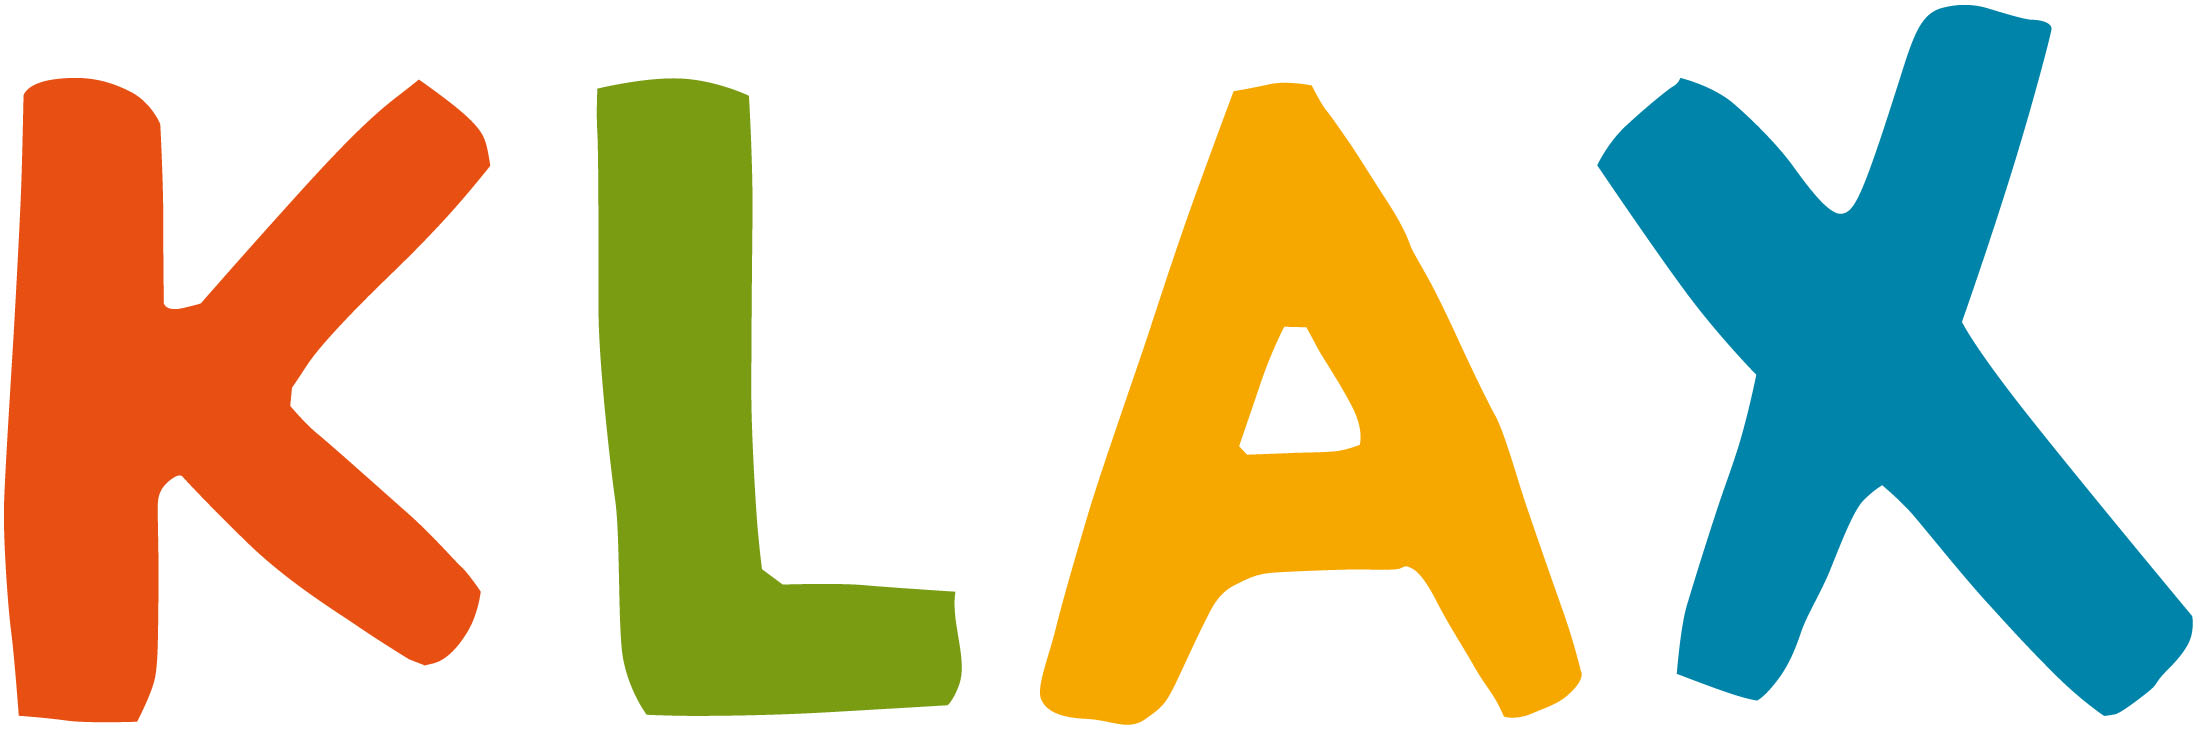 Klax logo